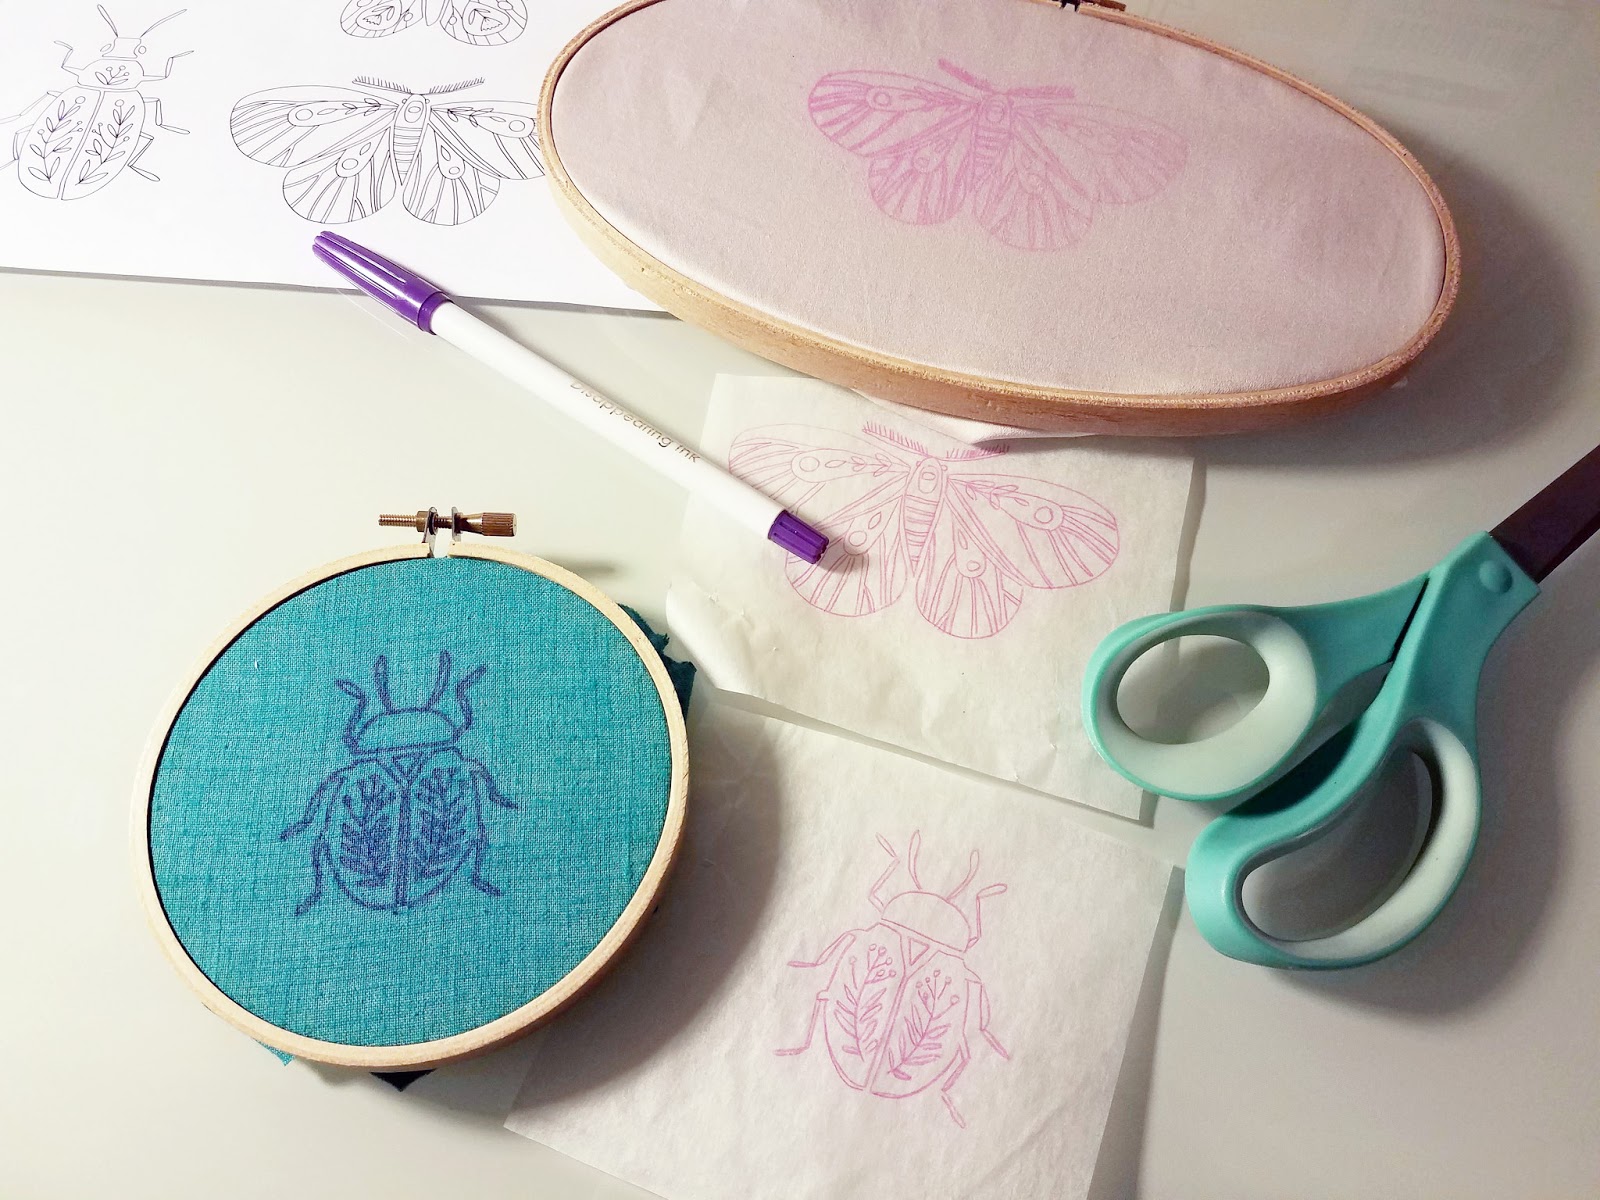 Threadfolk pattern embroidery by floresita on Feeling Stitchy